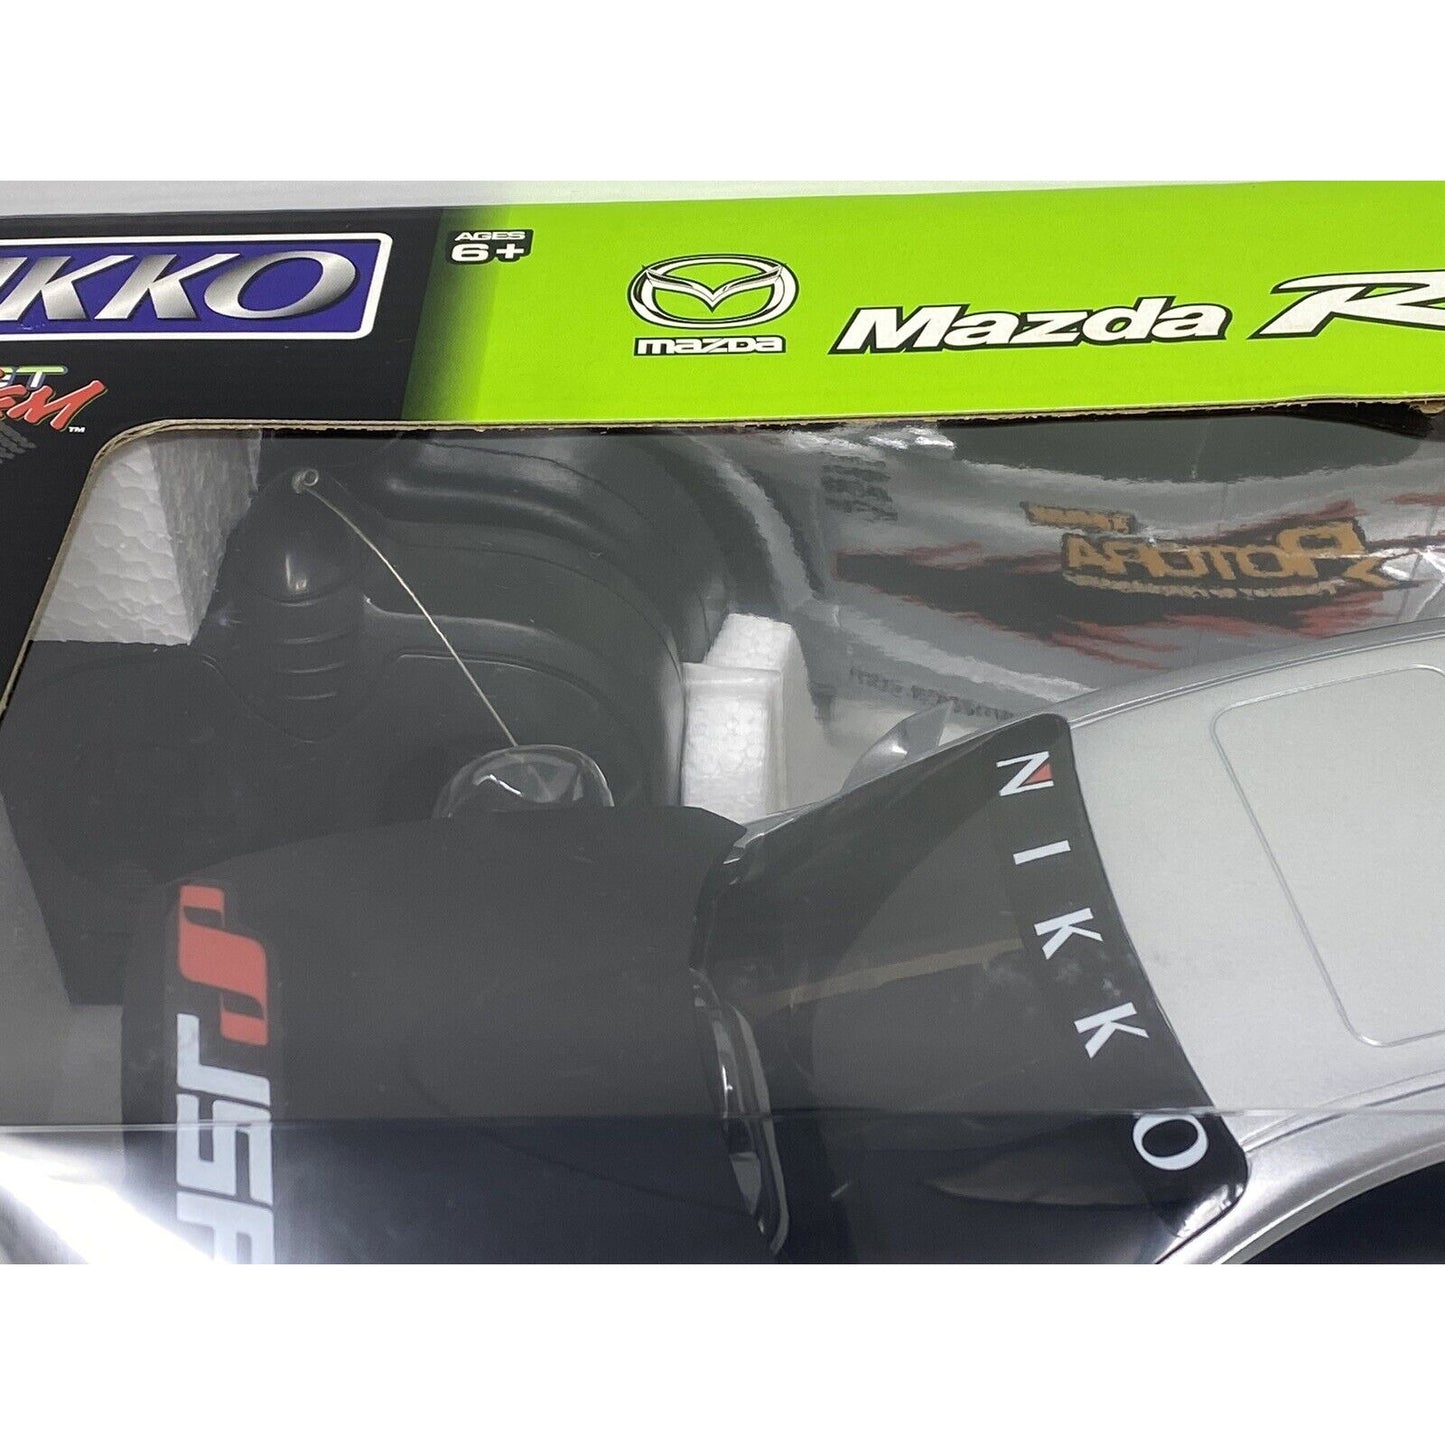 NEW Nikko Mazda RX-8 Street Mayhem Tuner 1:16 Radio Controlled Car- Bonus Tires